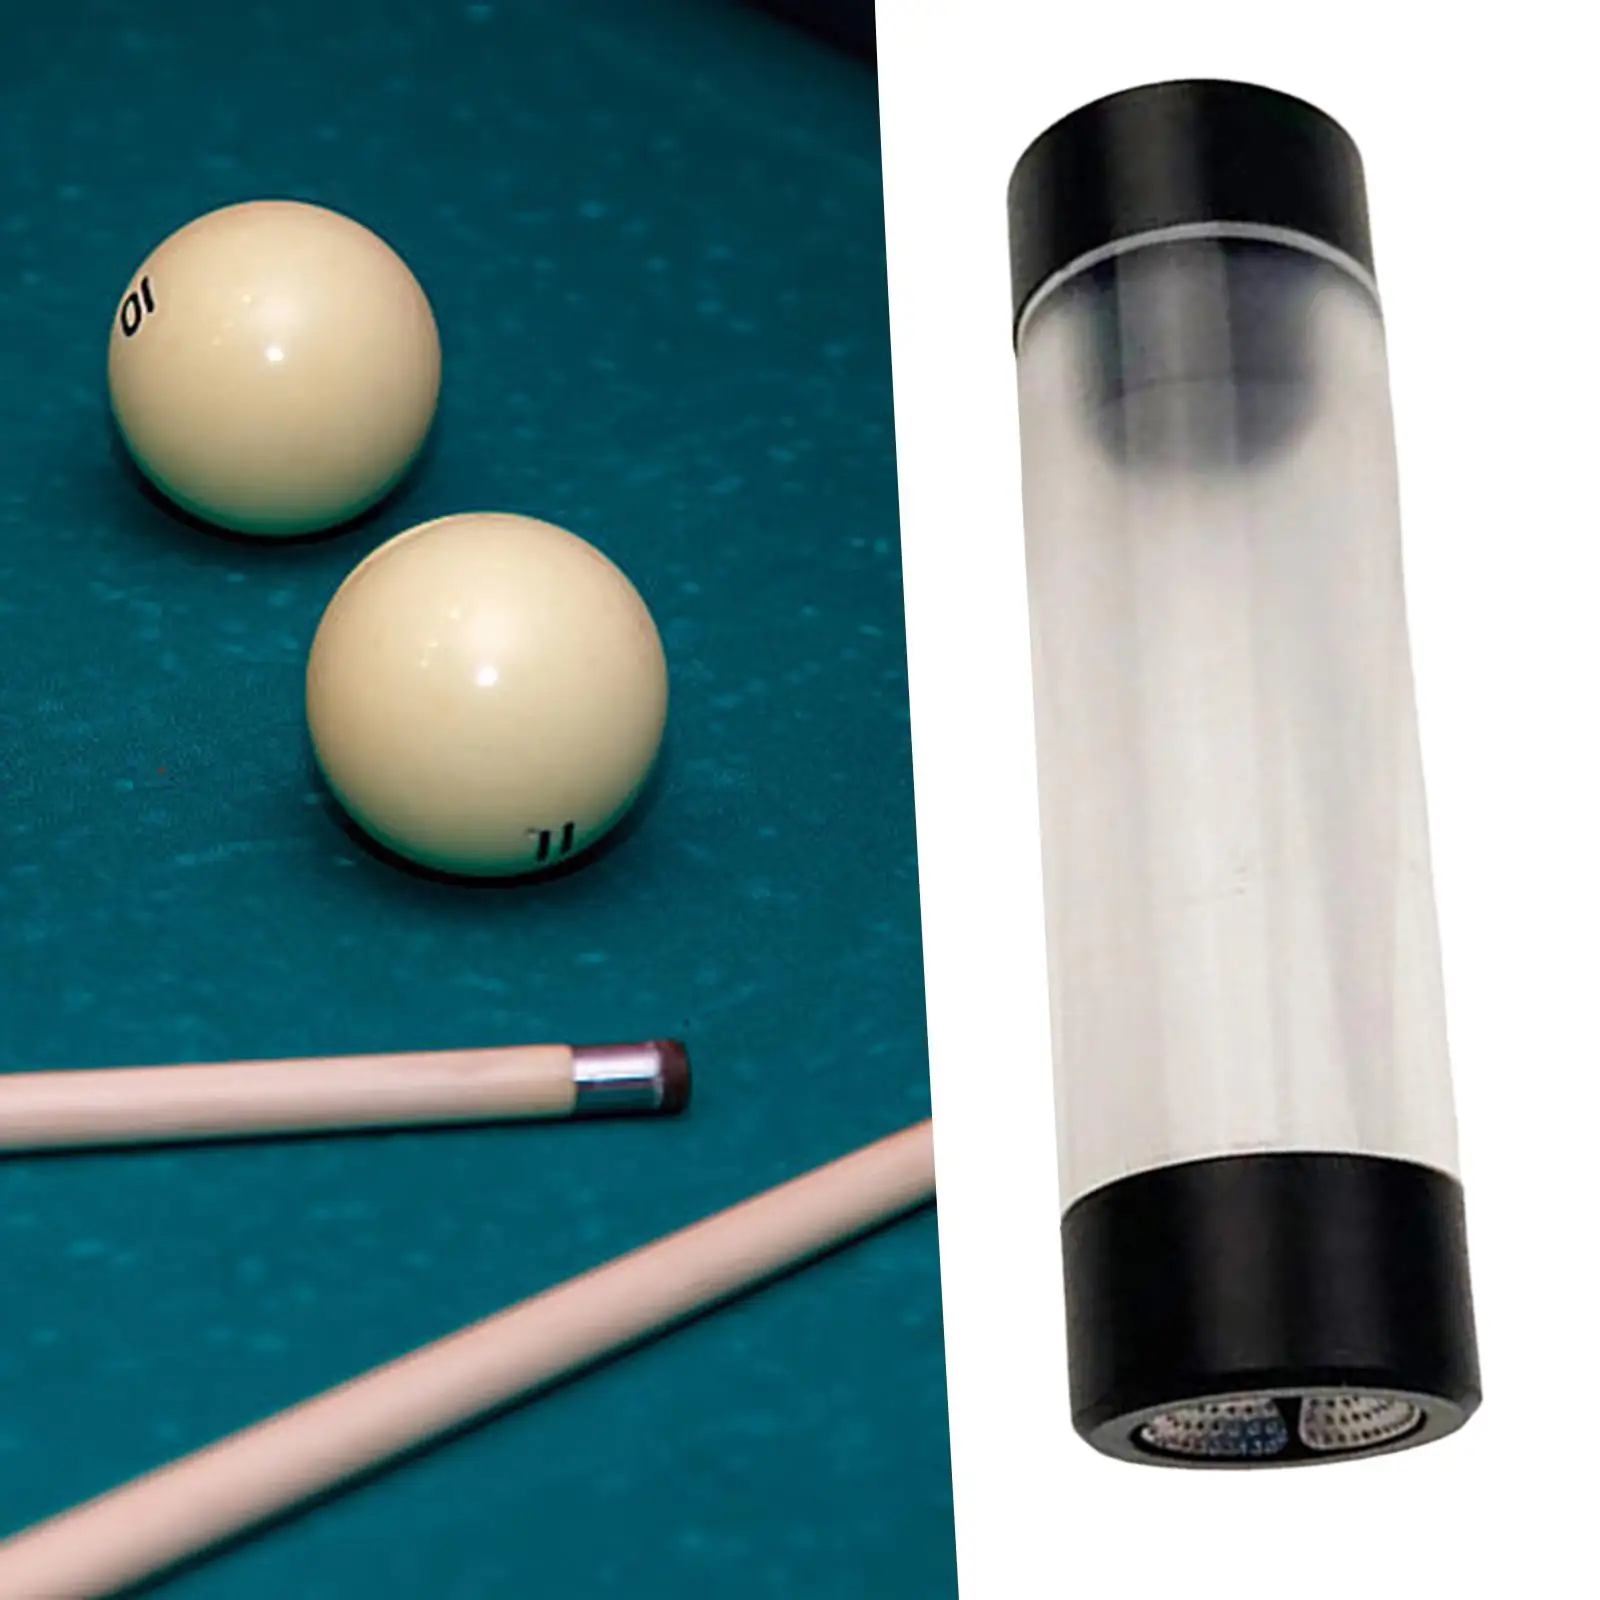 Billiard Pool Cue Tip Shaper, Cue Tip Burnisher/Shaper/Tapper Pool Tip Repair Tool Accessory for Snooker